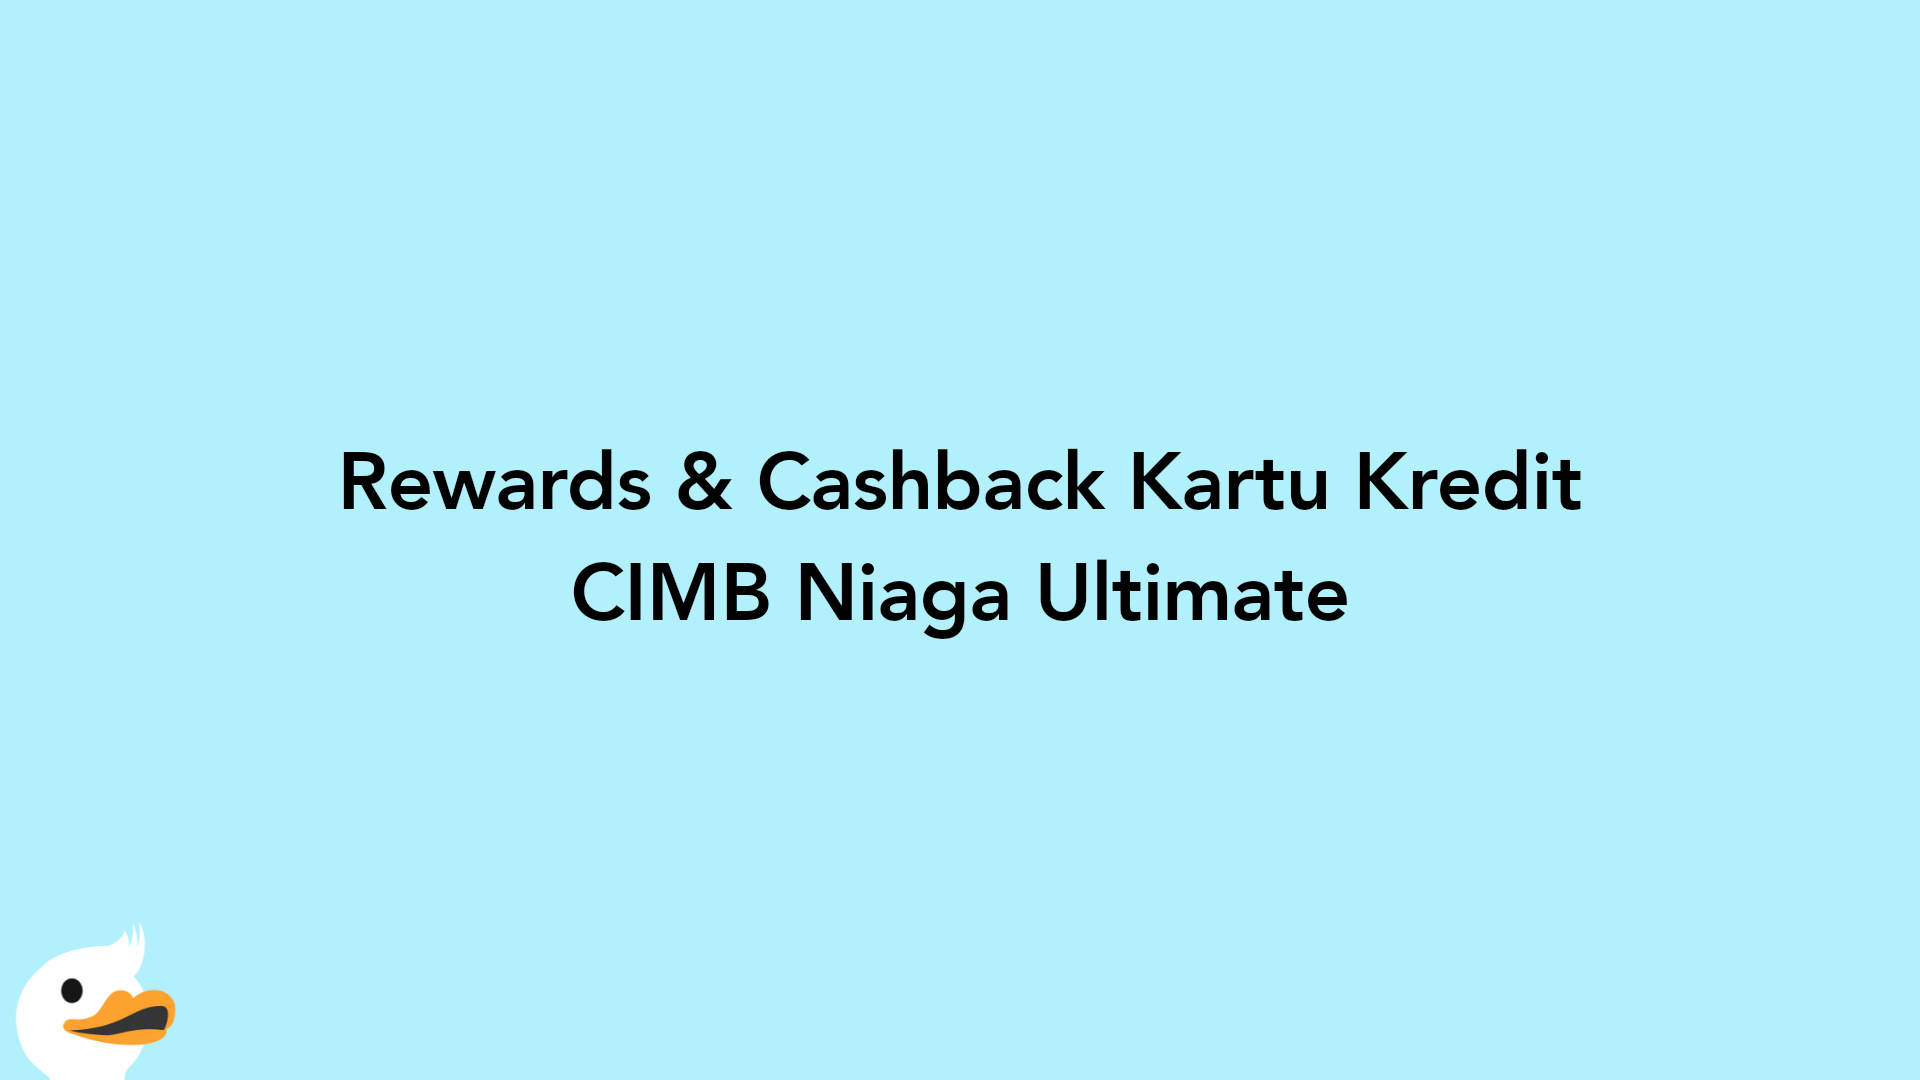 Rewards & Cashback Kartu Kredit CIMB Niaga Ultimate